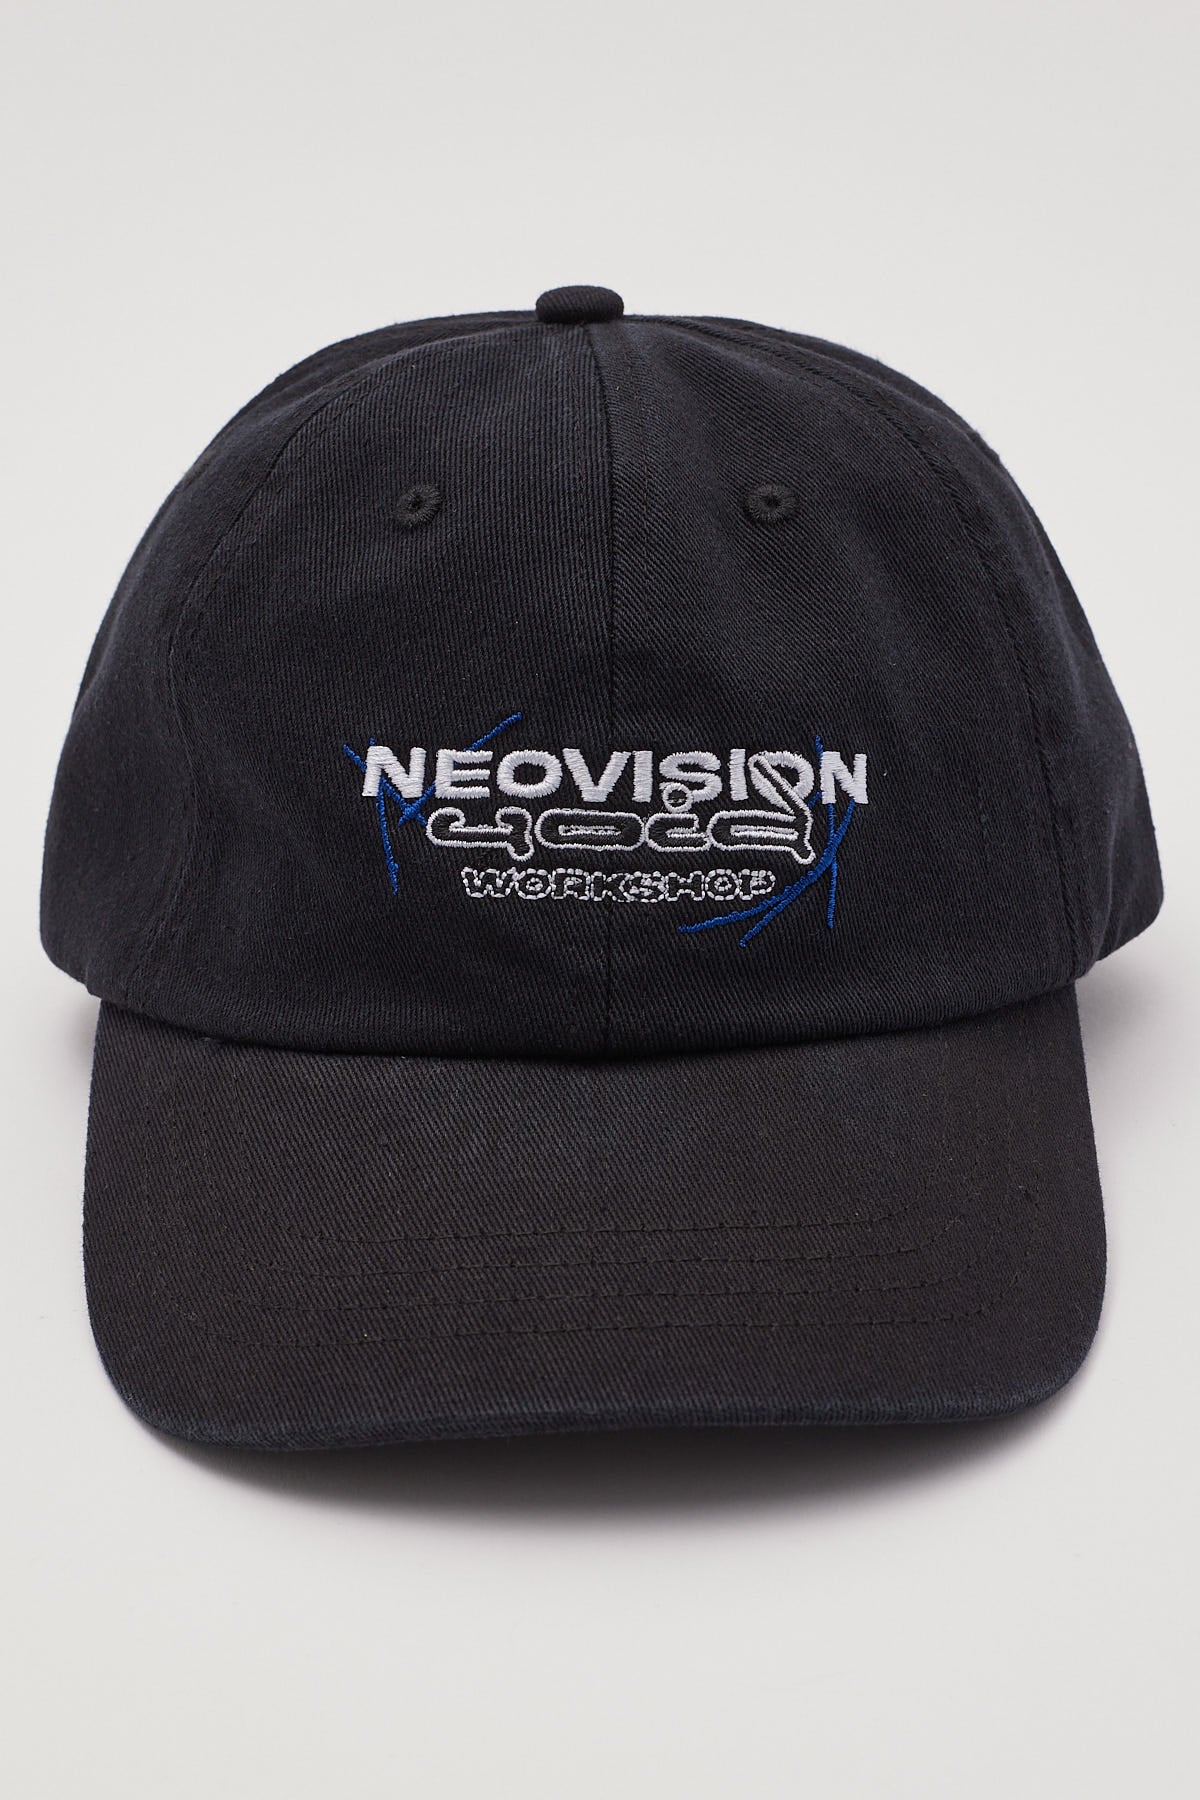 Neovision Exoplanet Dad Cap Black